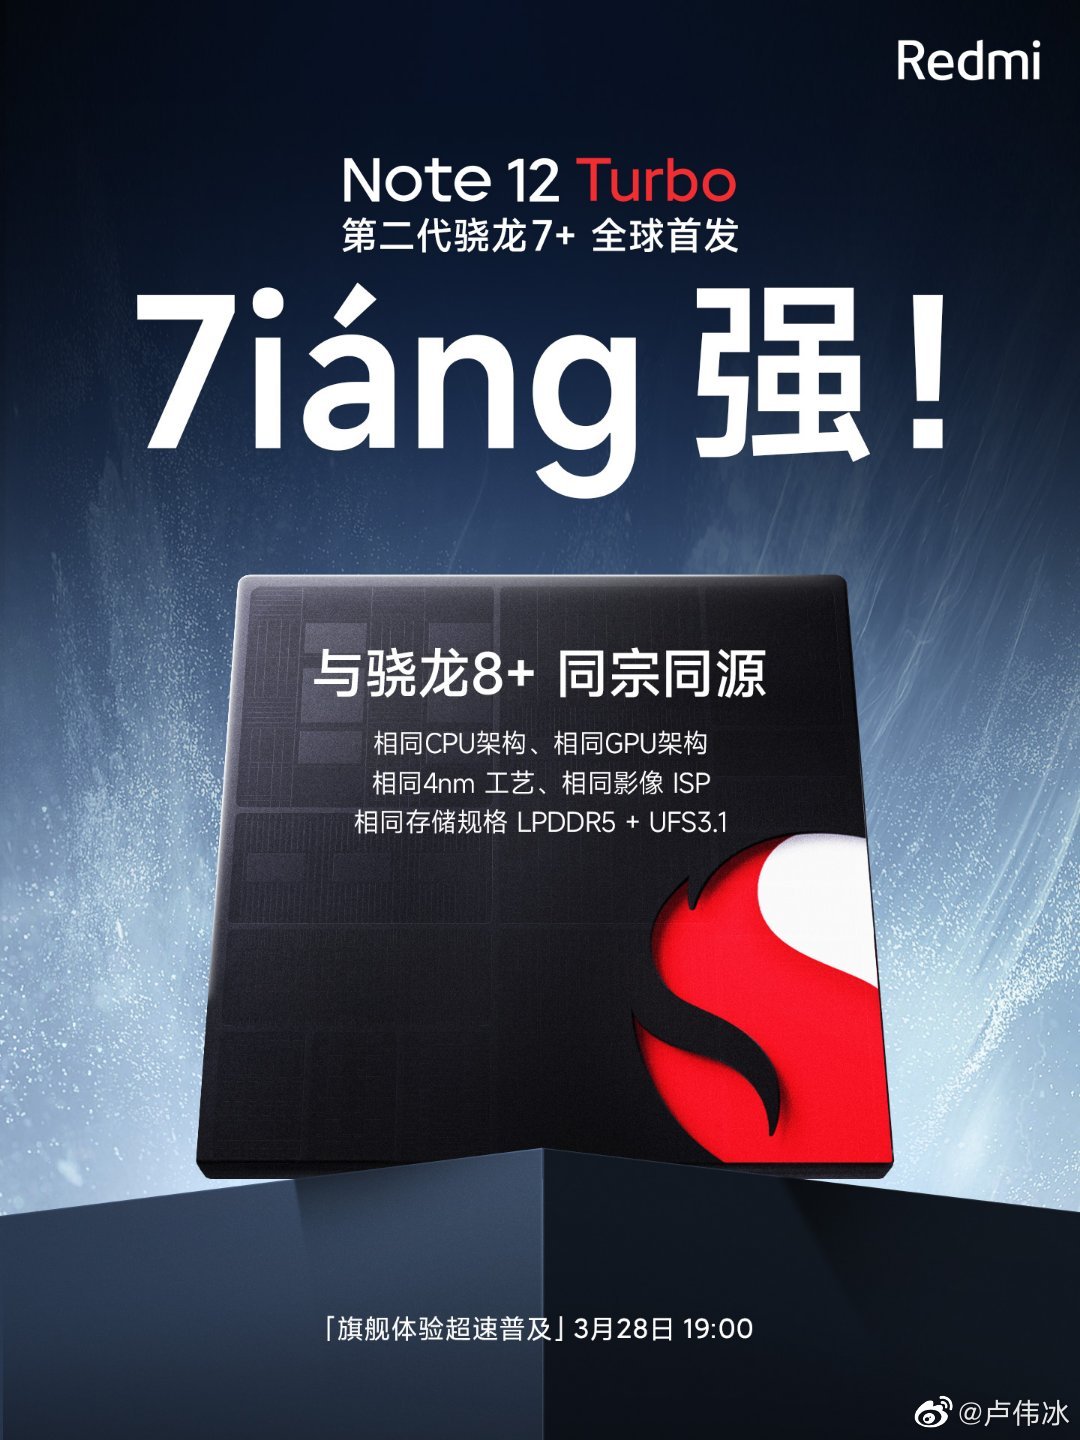 Redmi Note 12 Turbo LPDDR5 RAM, UFS 3.1 storage